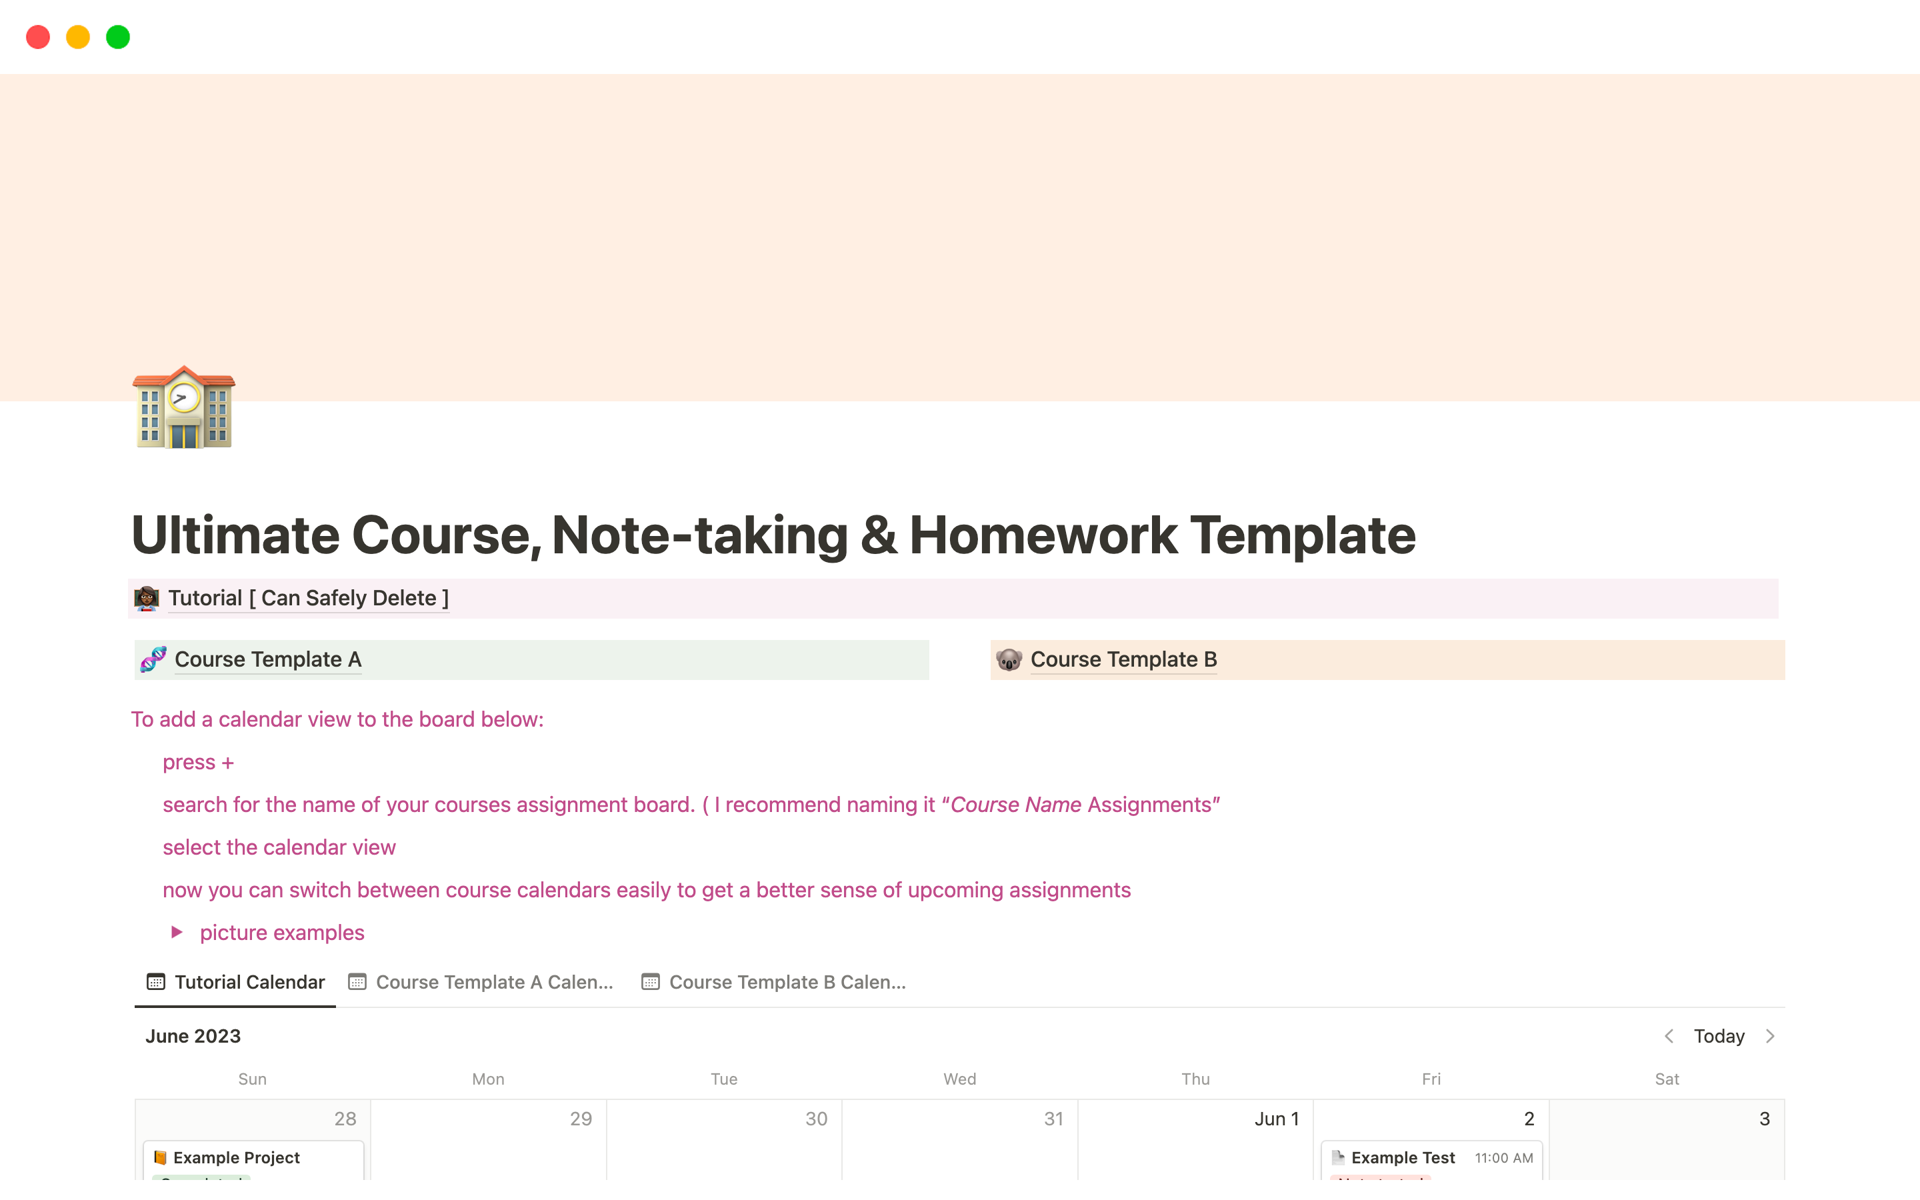 Ultimate Course, Note Taking & Homework Template님의 템플릿 미리보기